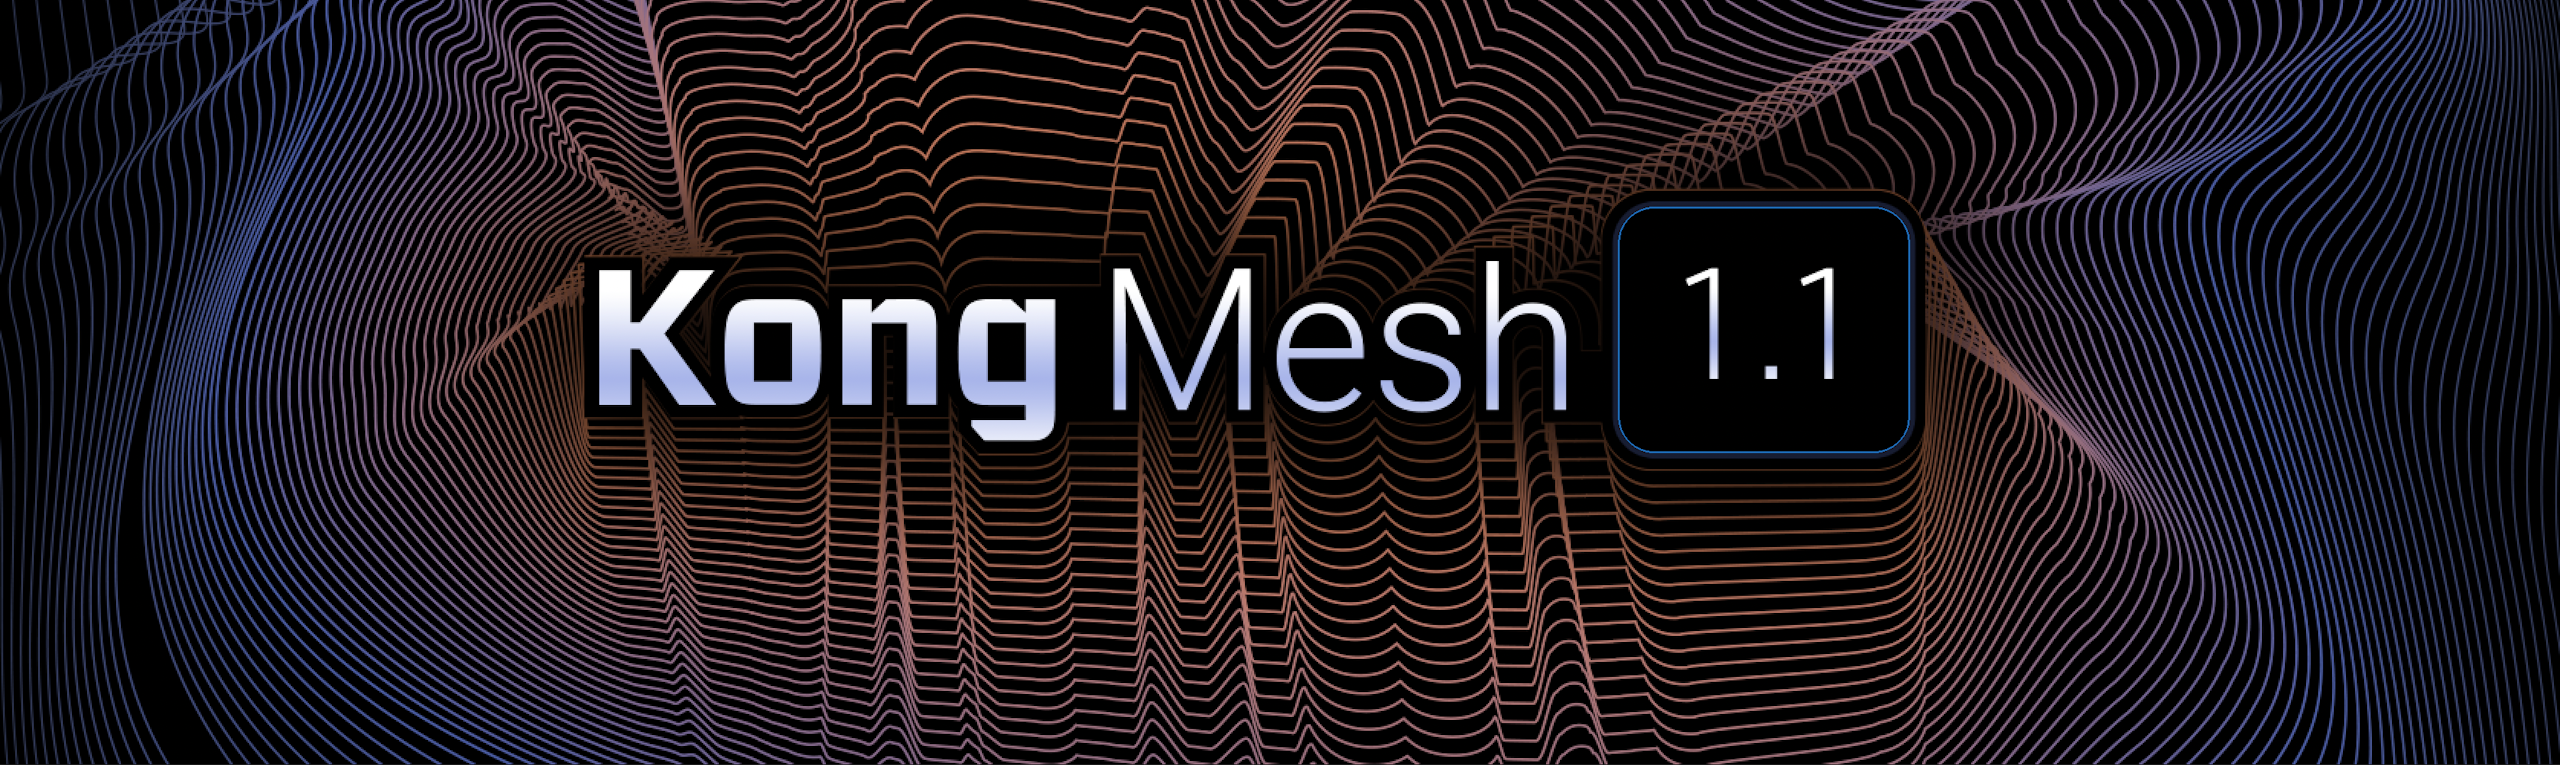 Kong Mesh 1.1 GA Released